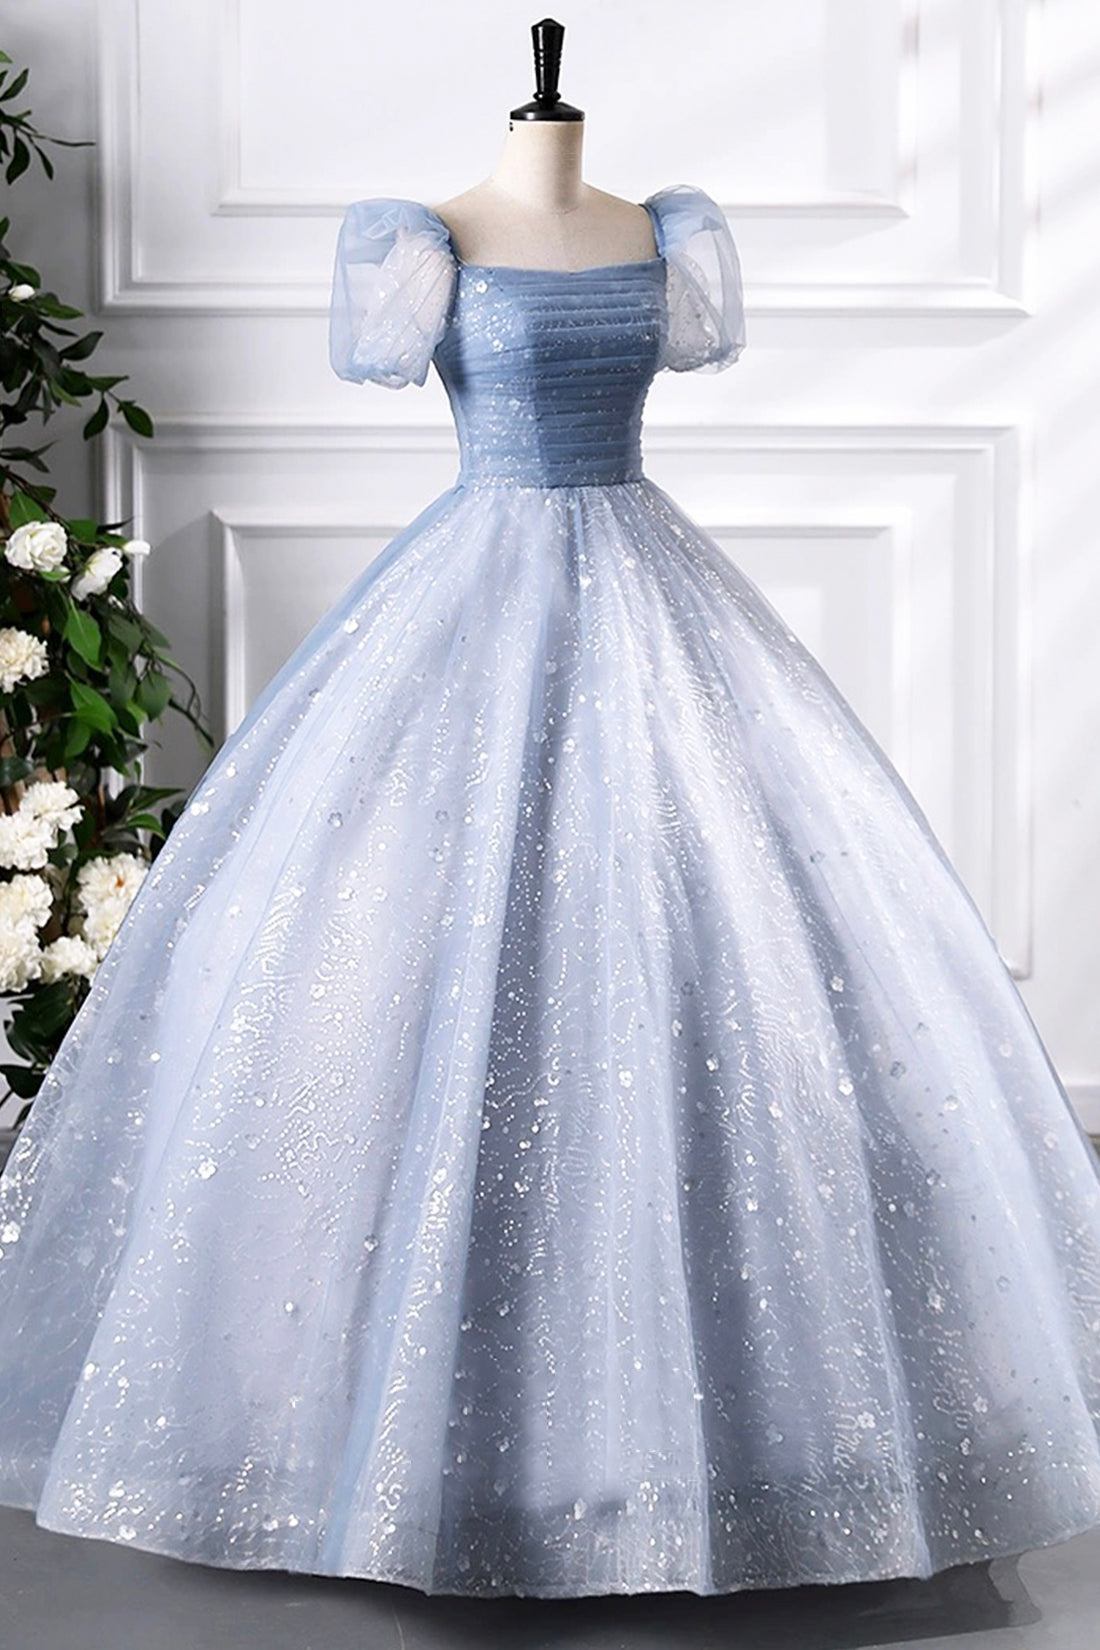 Blue Tulle Sequins Floor Length Prom Dress, Elegant Short Sleeve Evening Party Dress